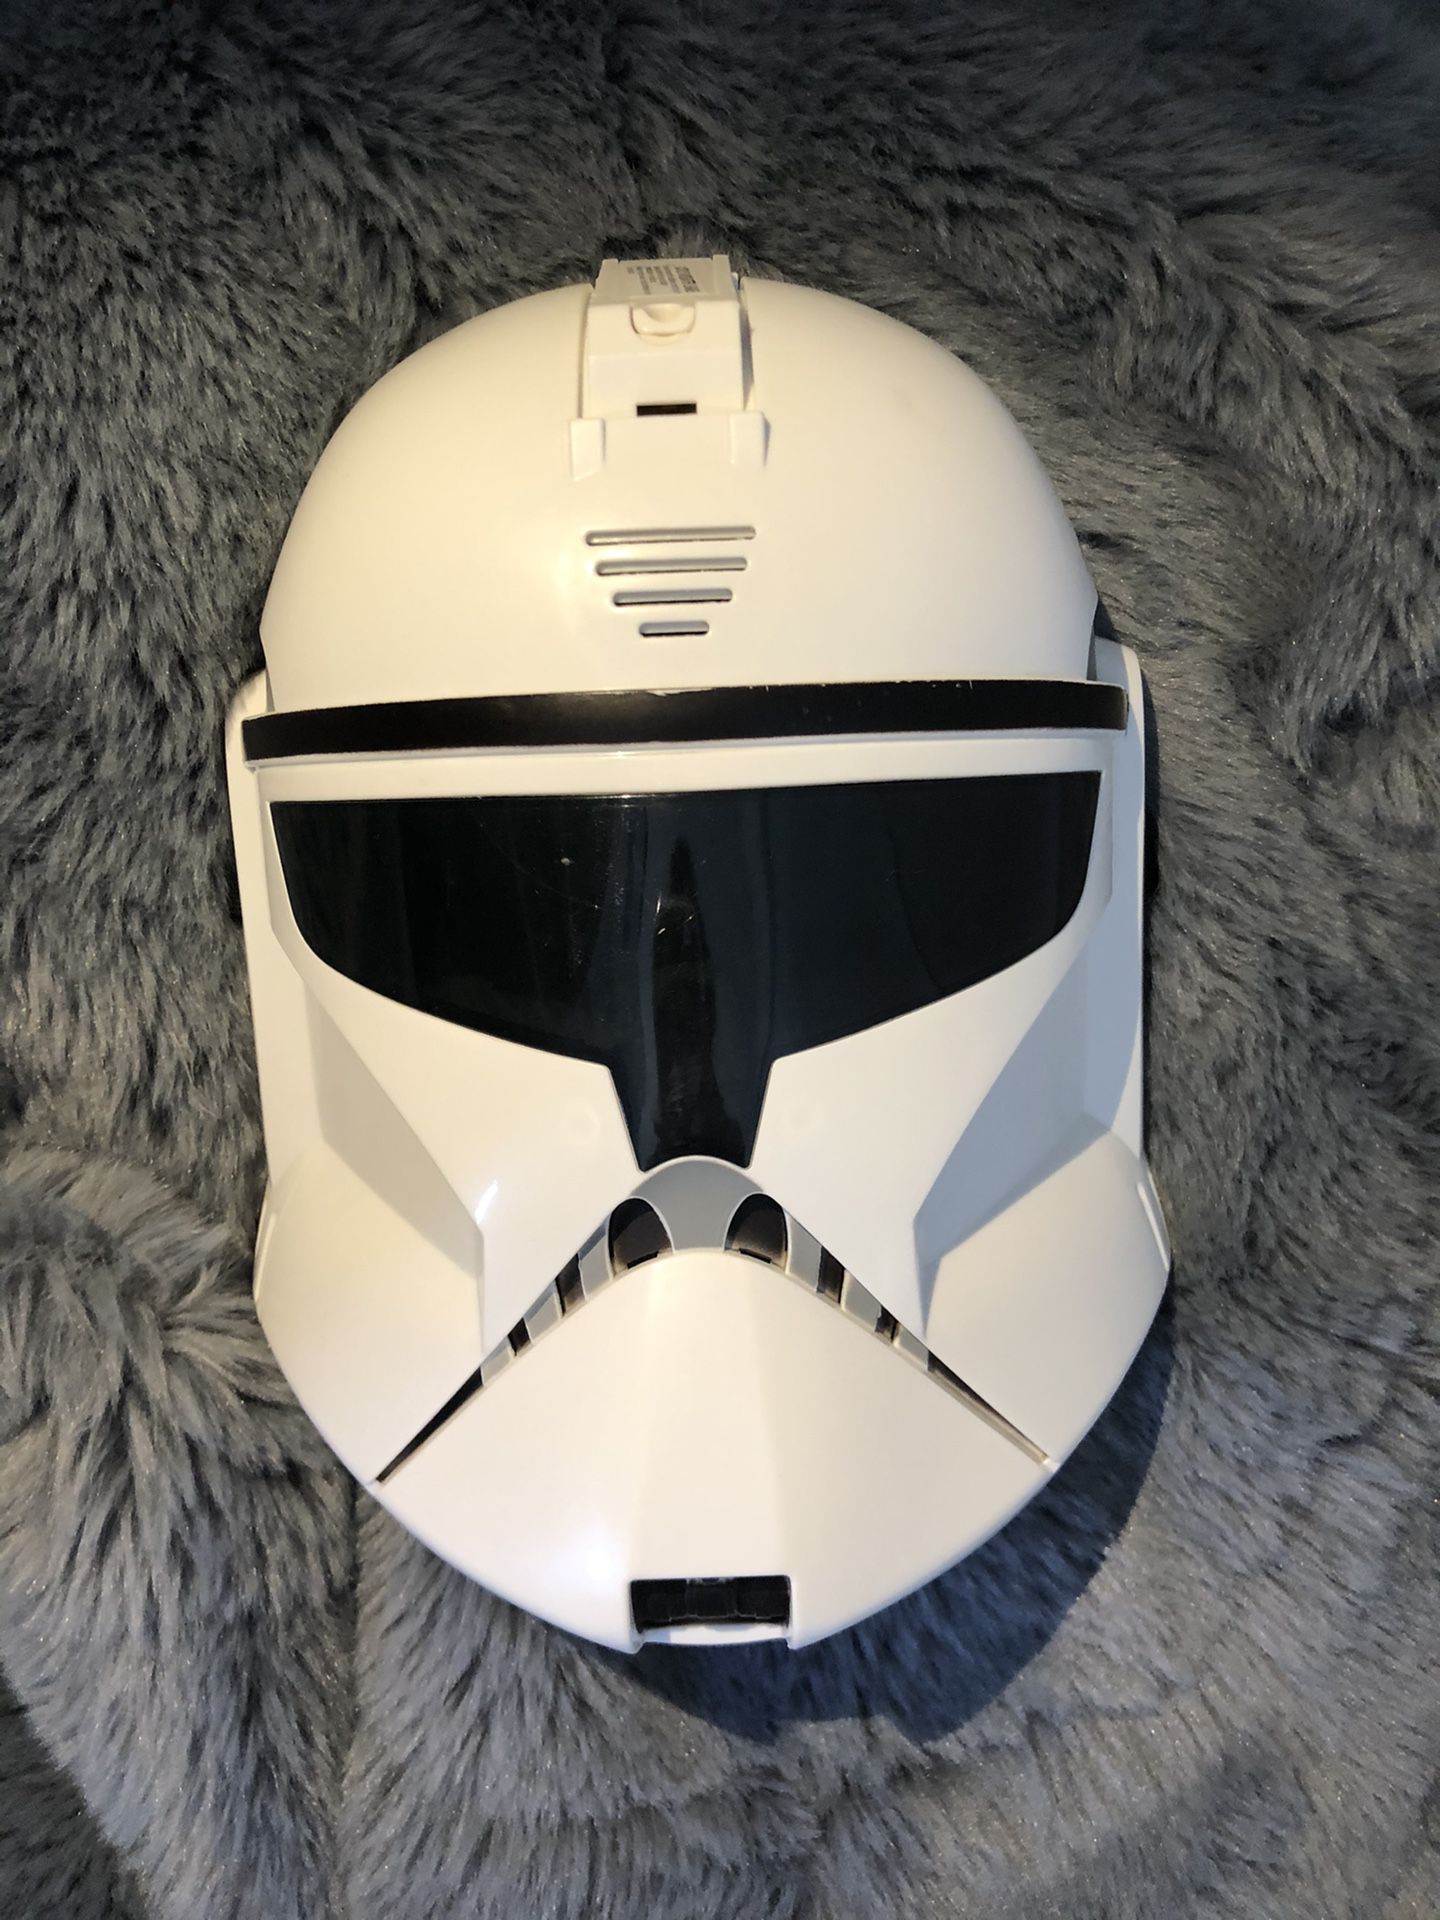 Star Wars mask